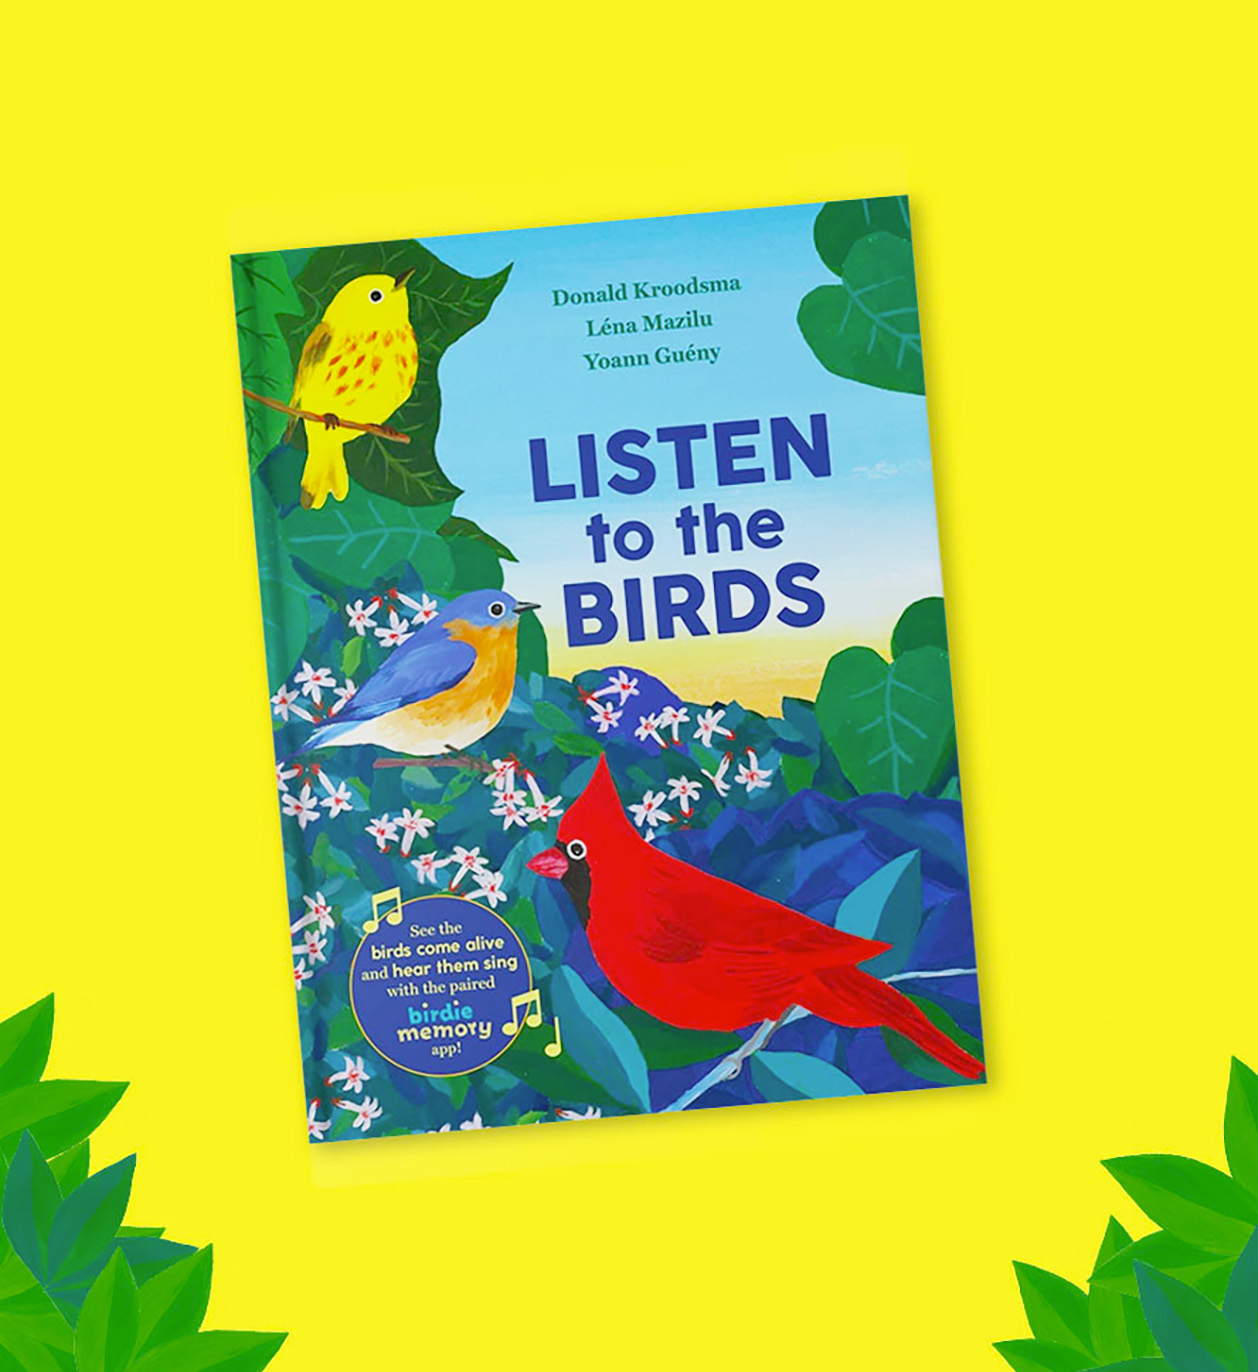 Le livre “Listen to the Birds”